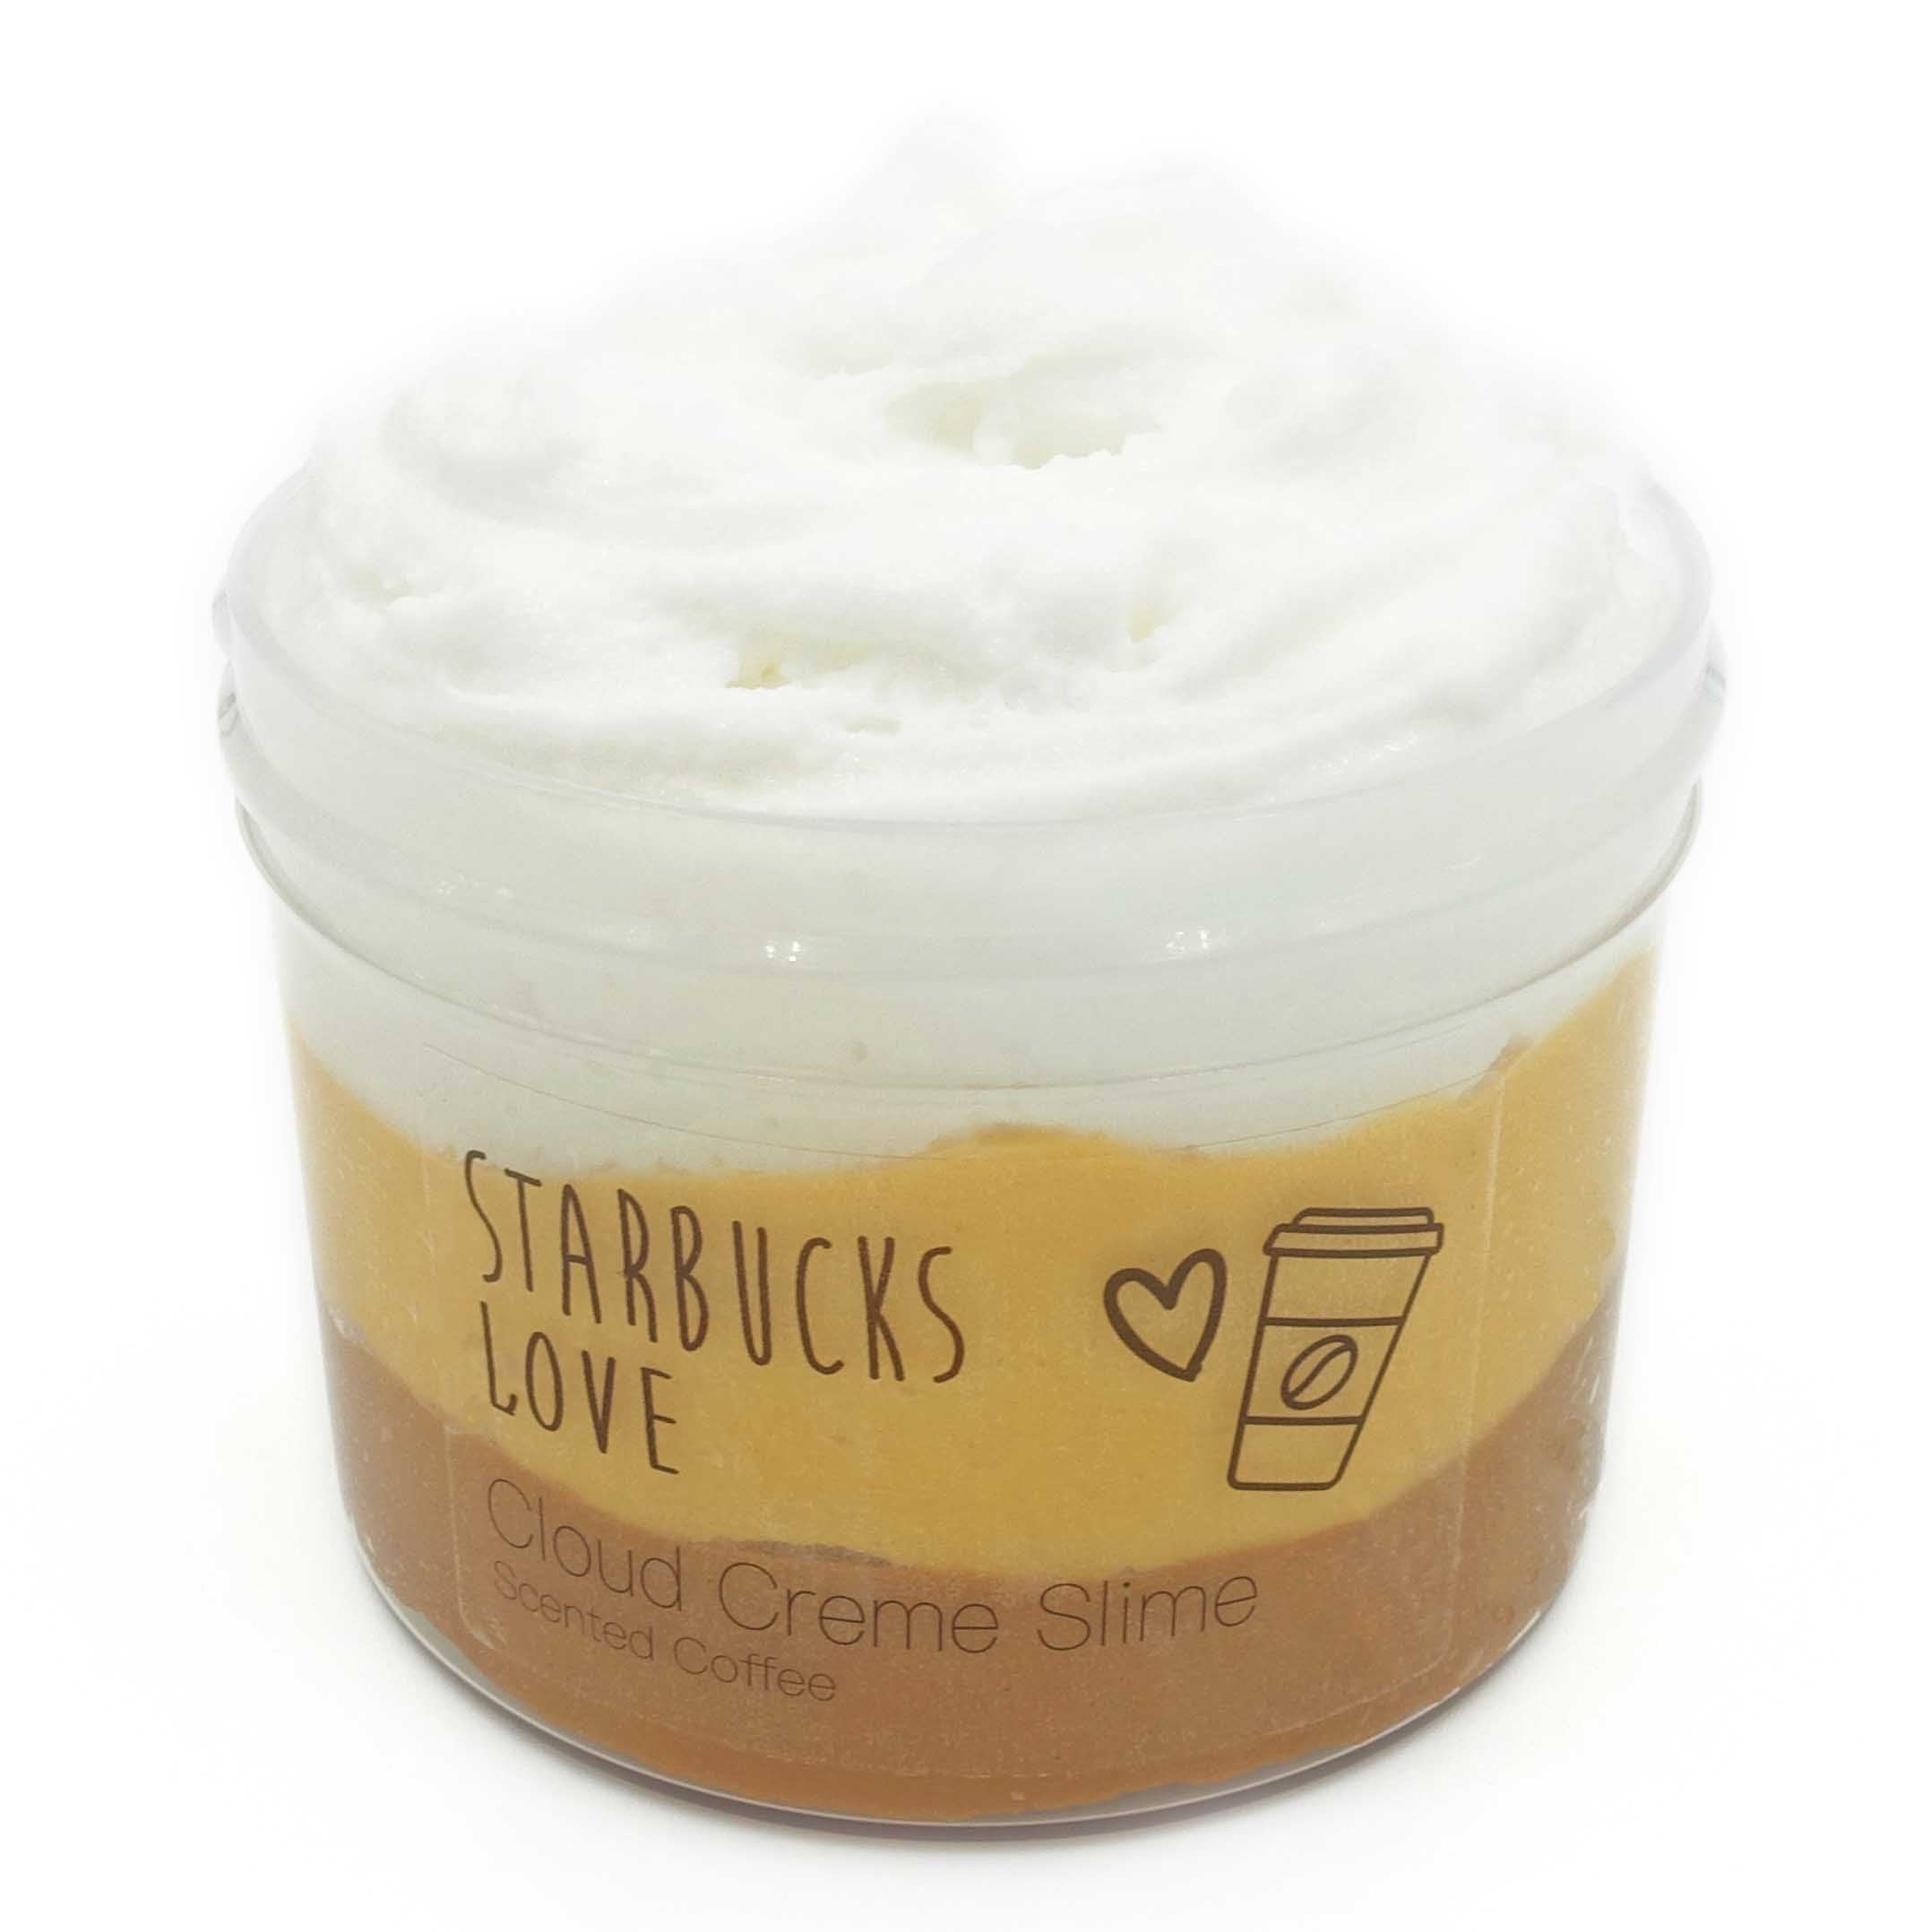 Starbucks Love Cloud Creme Slime